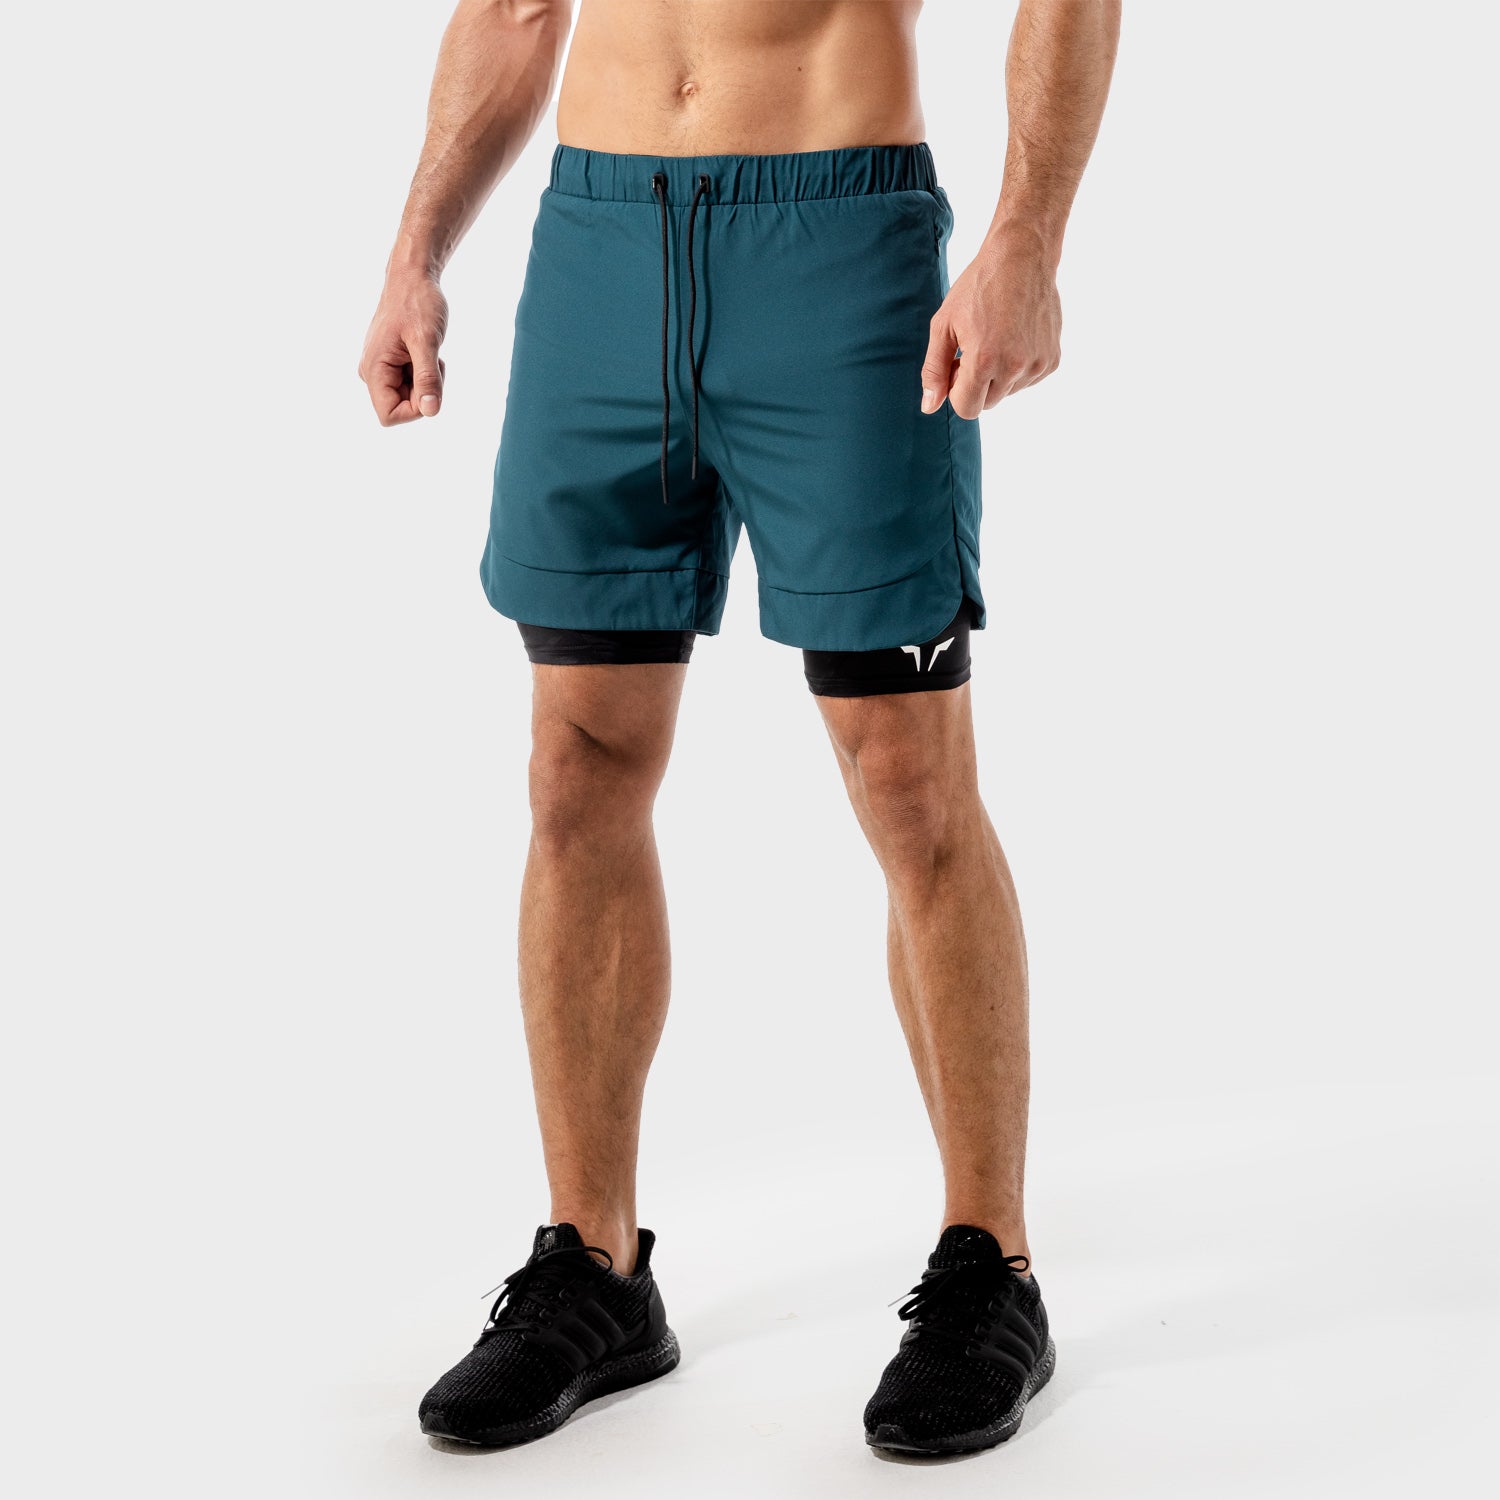 DZ, Limitless 2-in-1 Shorts - Light Grey, Gym Shorts Men